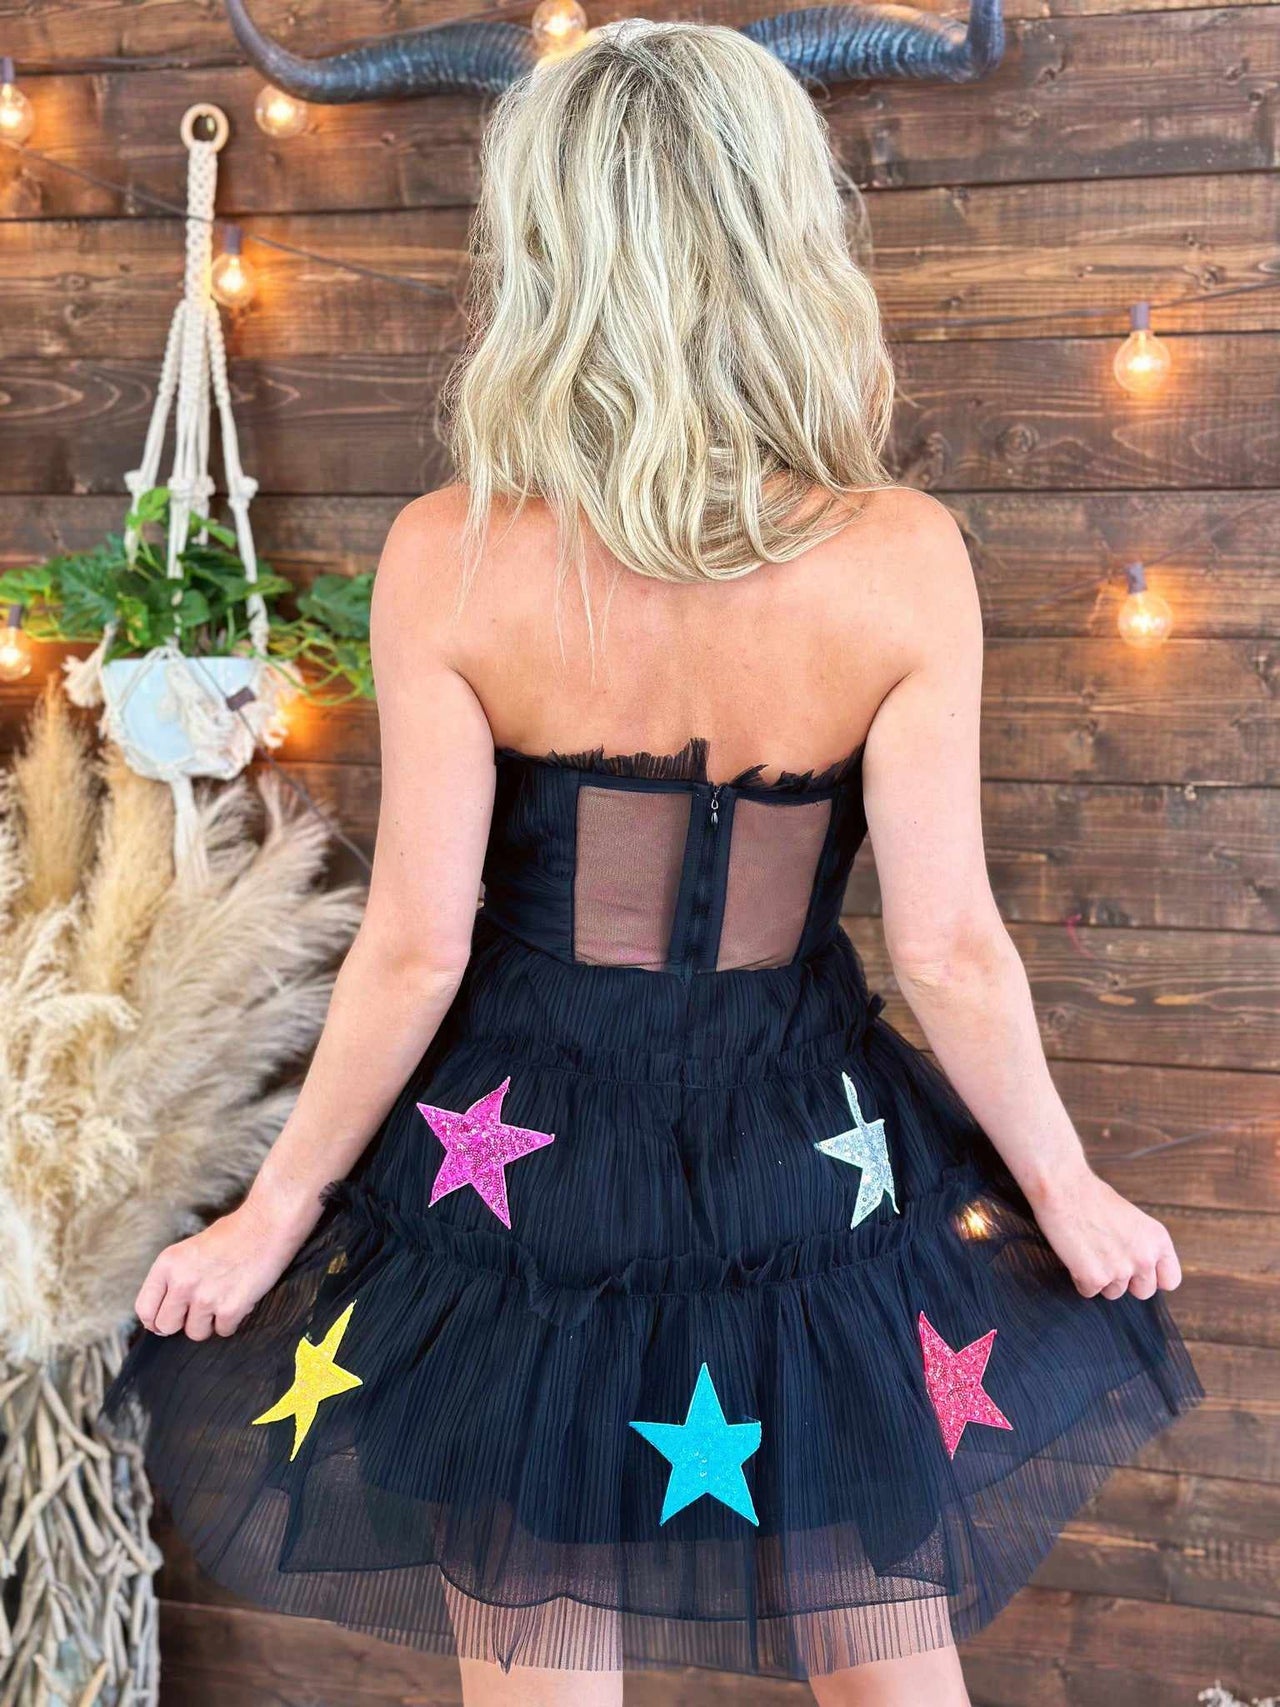 Strapless black mini dress with ruffles and stars.